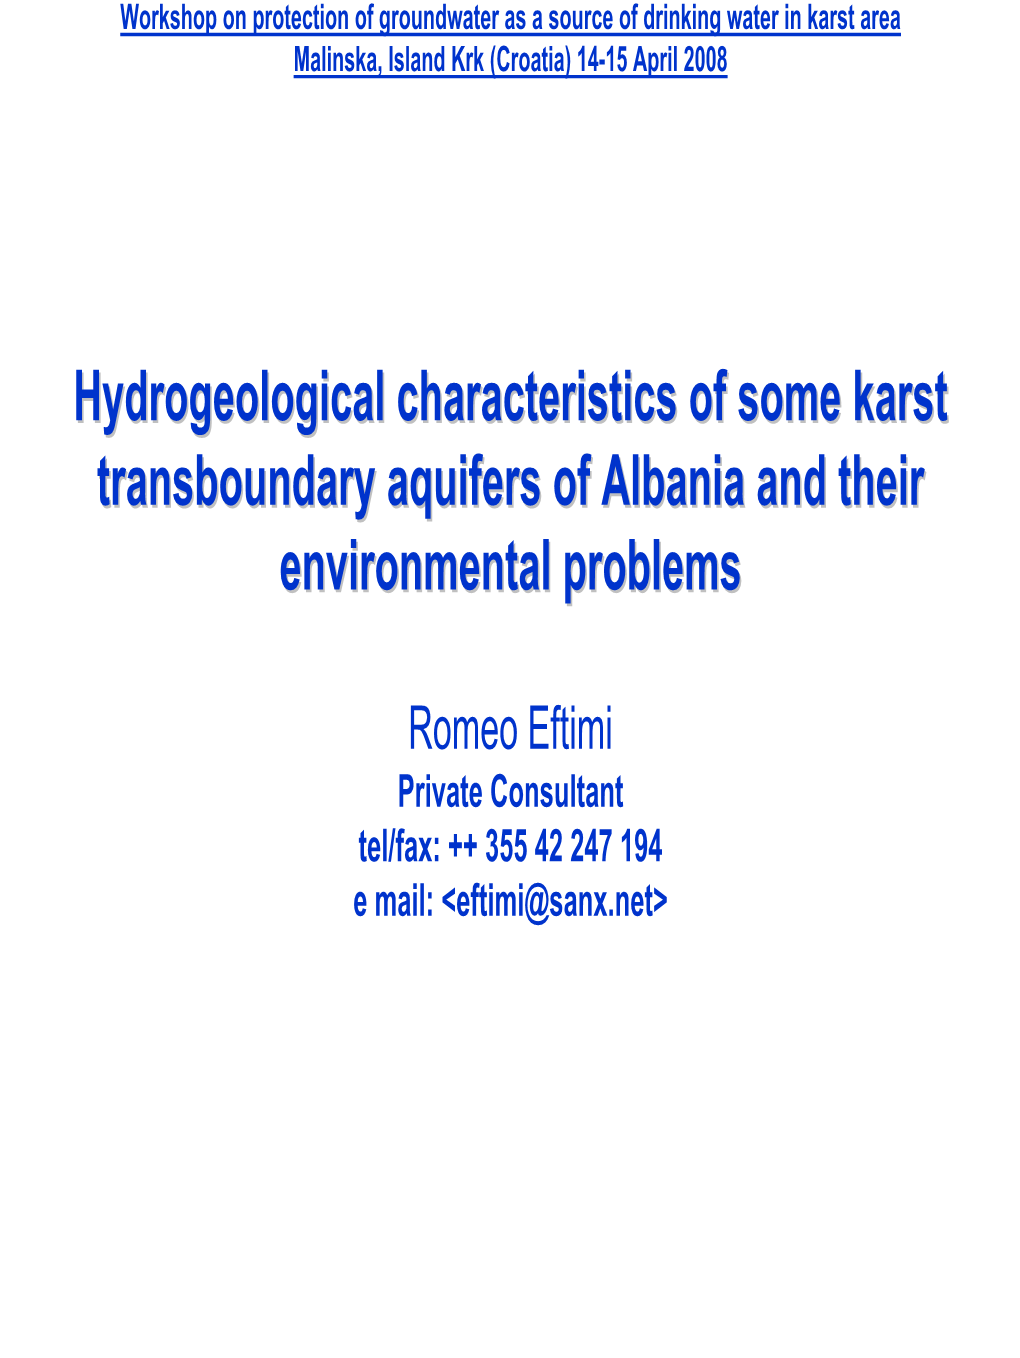 Characteristics of Transboundary Aquifers of Albania